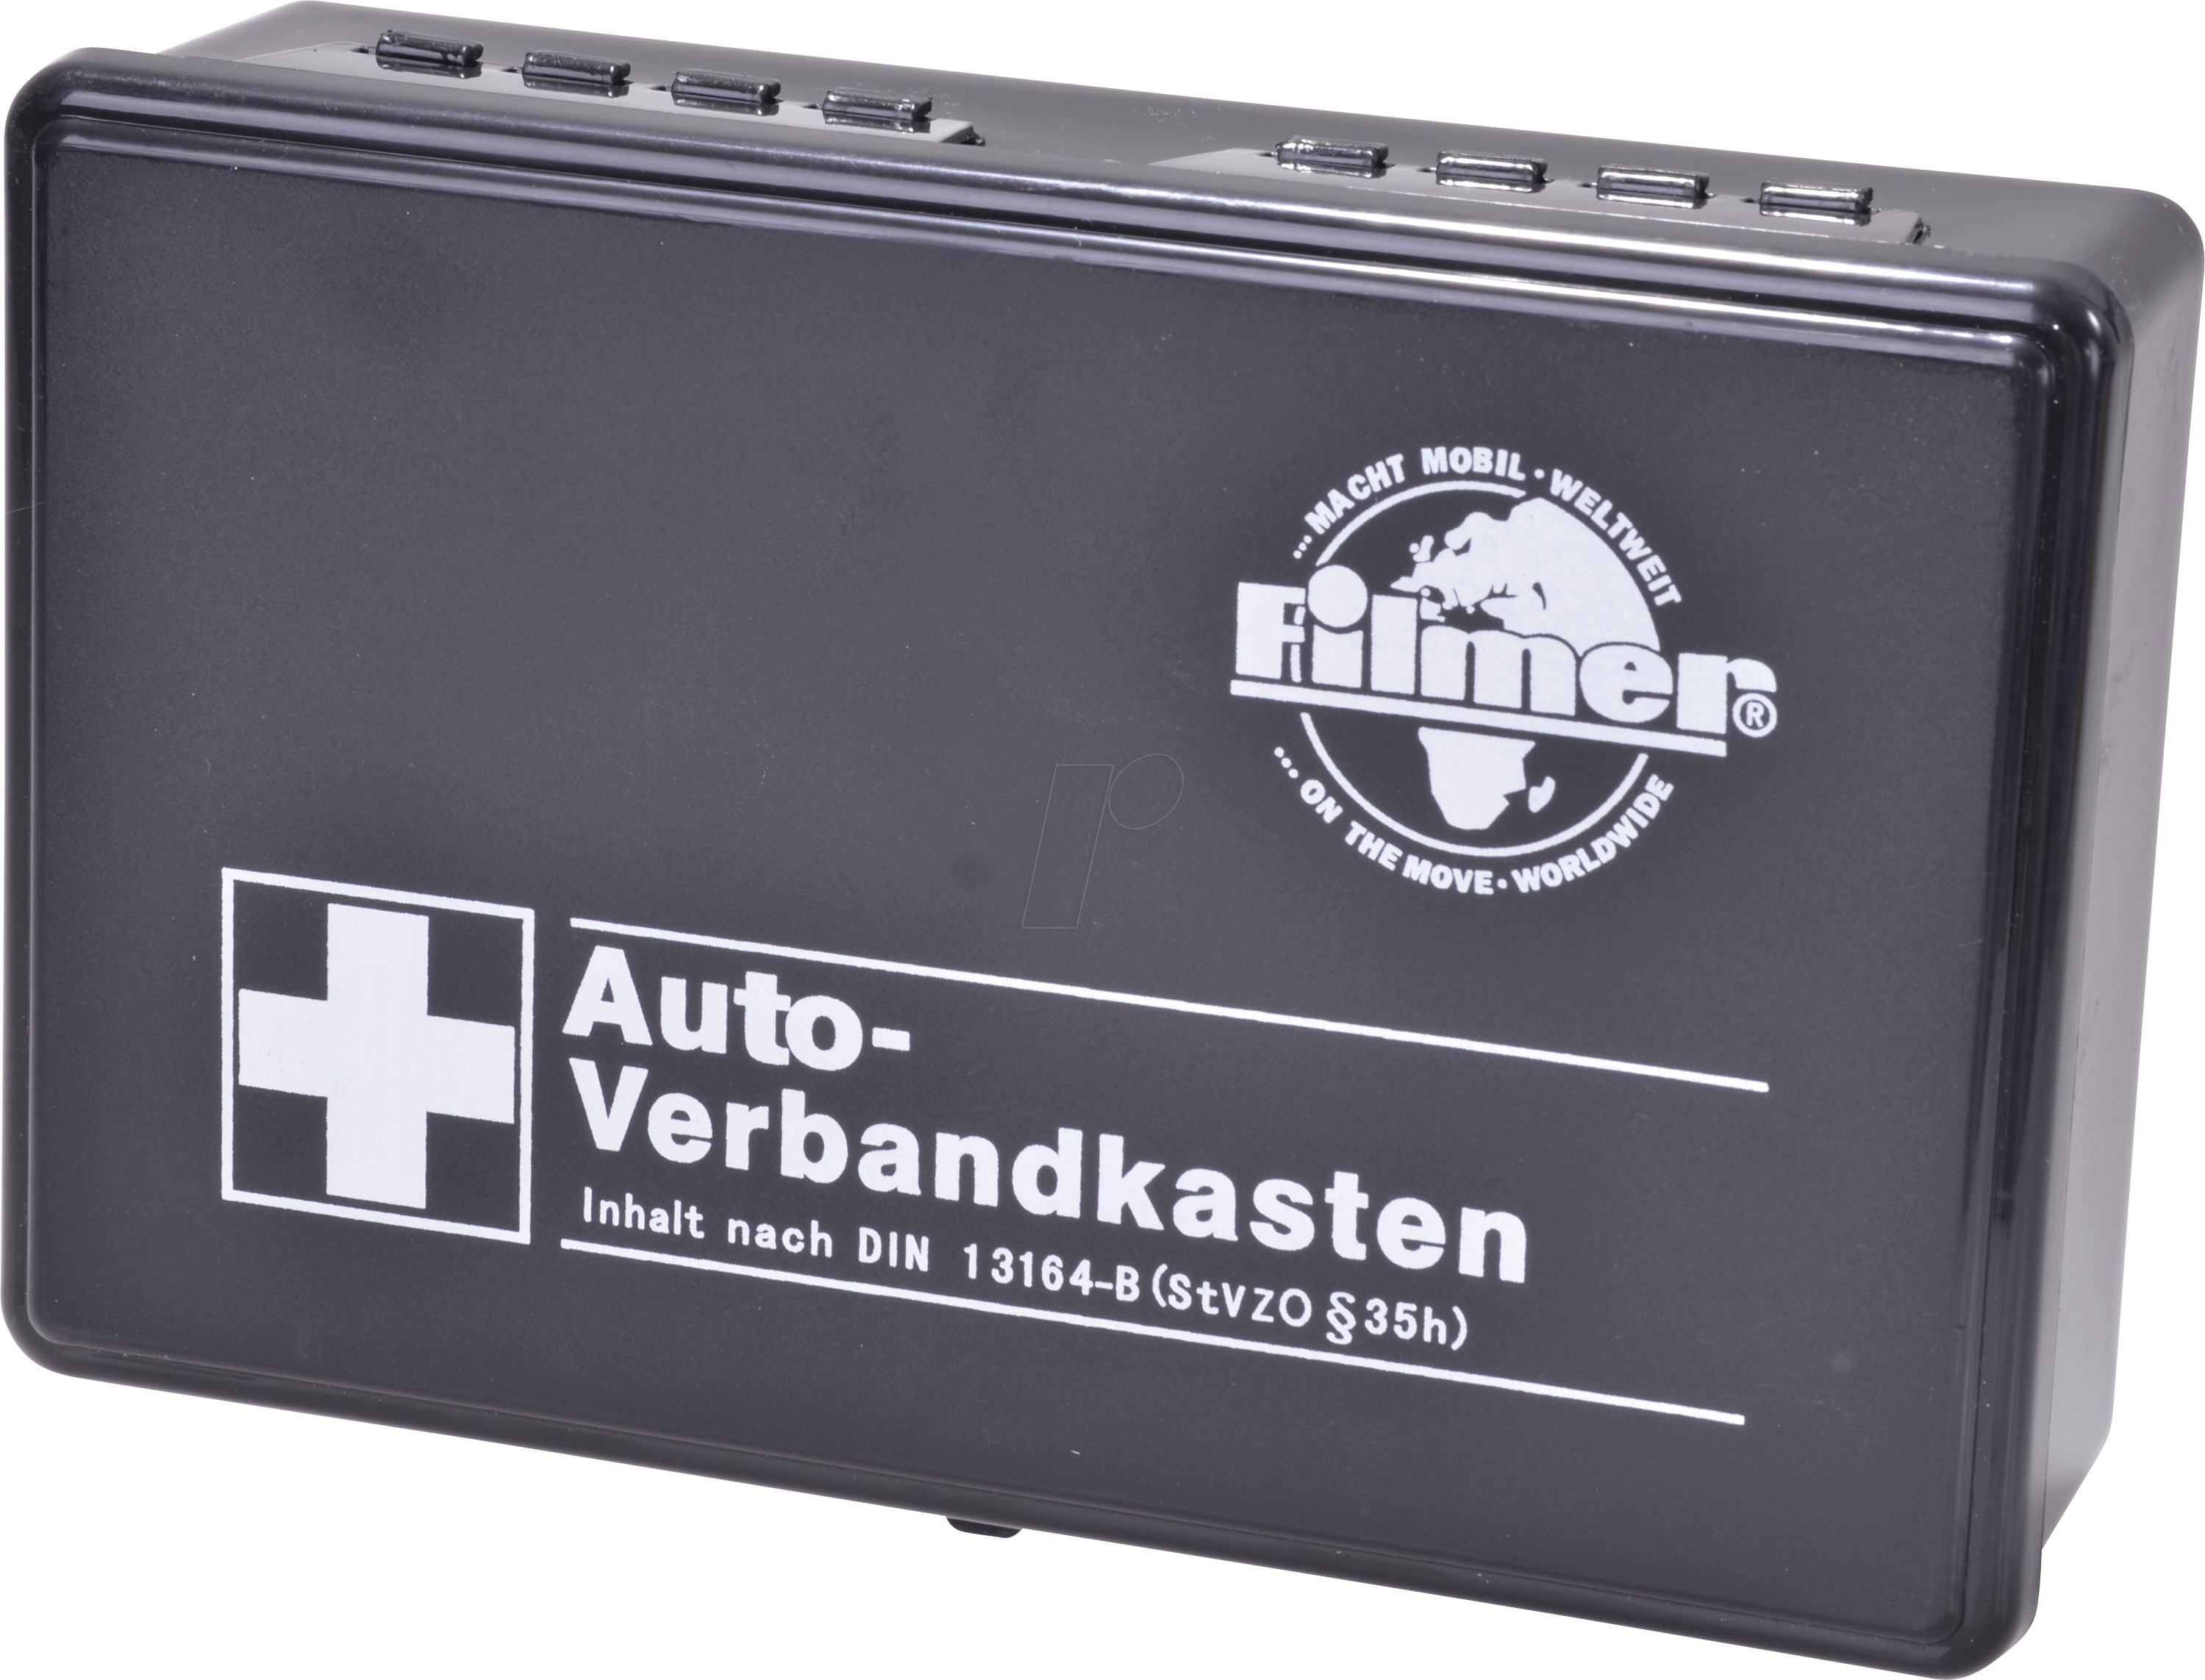 KFZ 17996: Auto - DIN13164, box reichelt elektronik